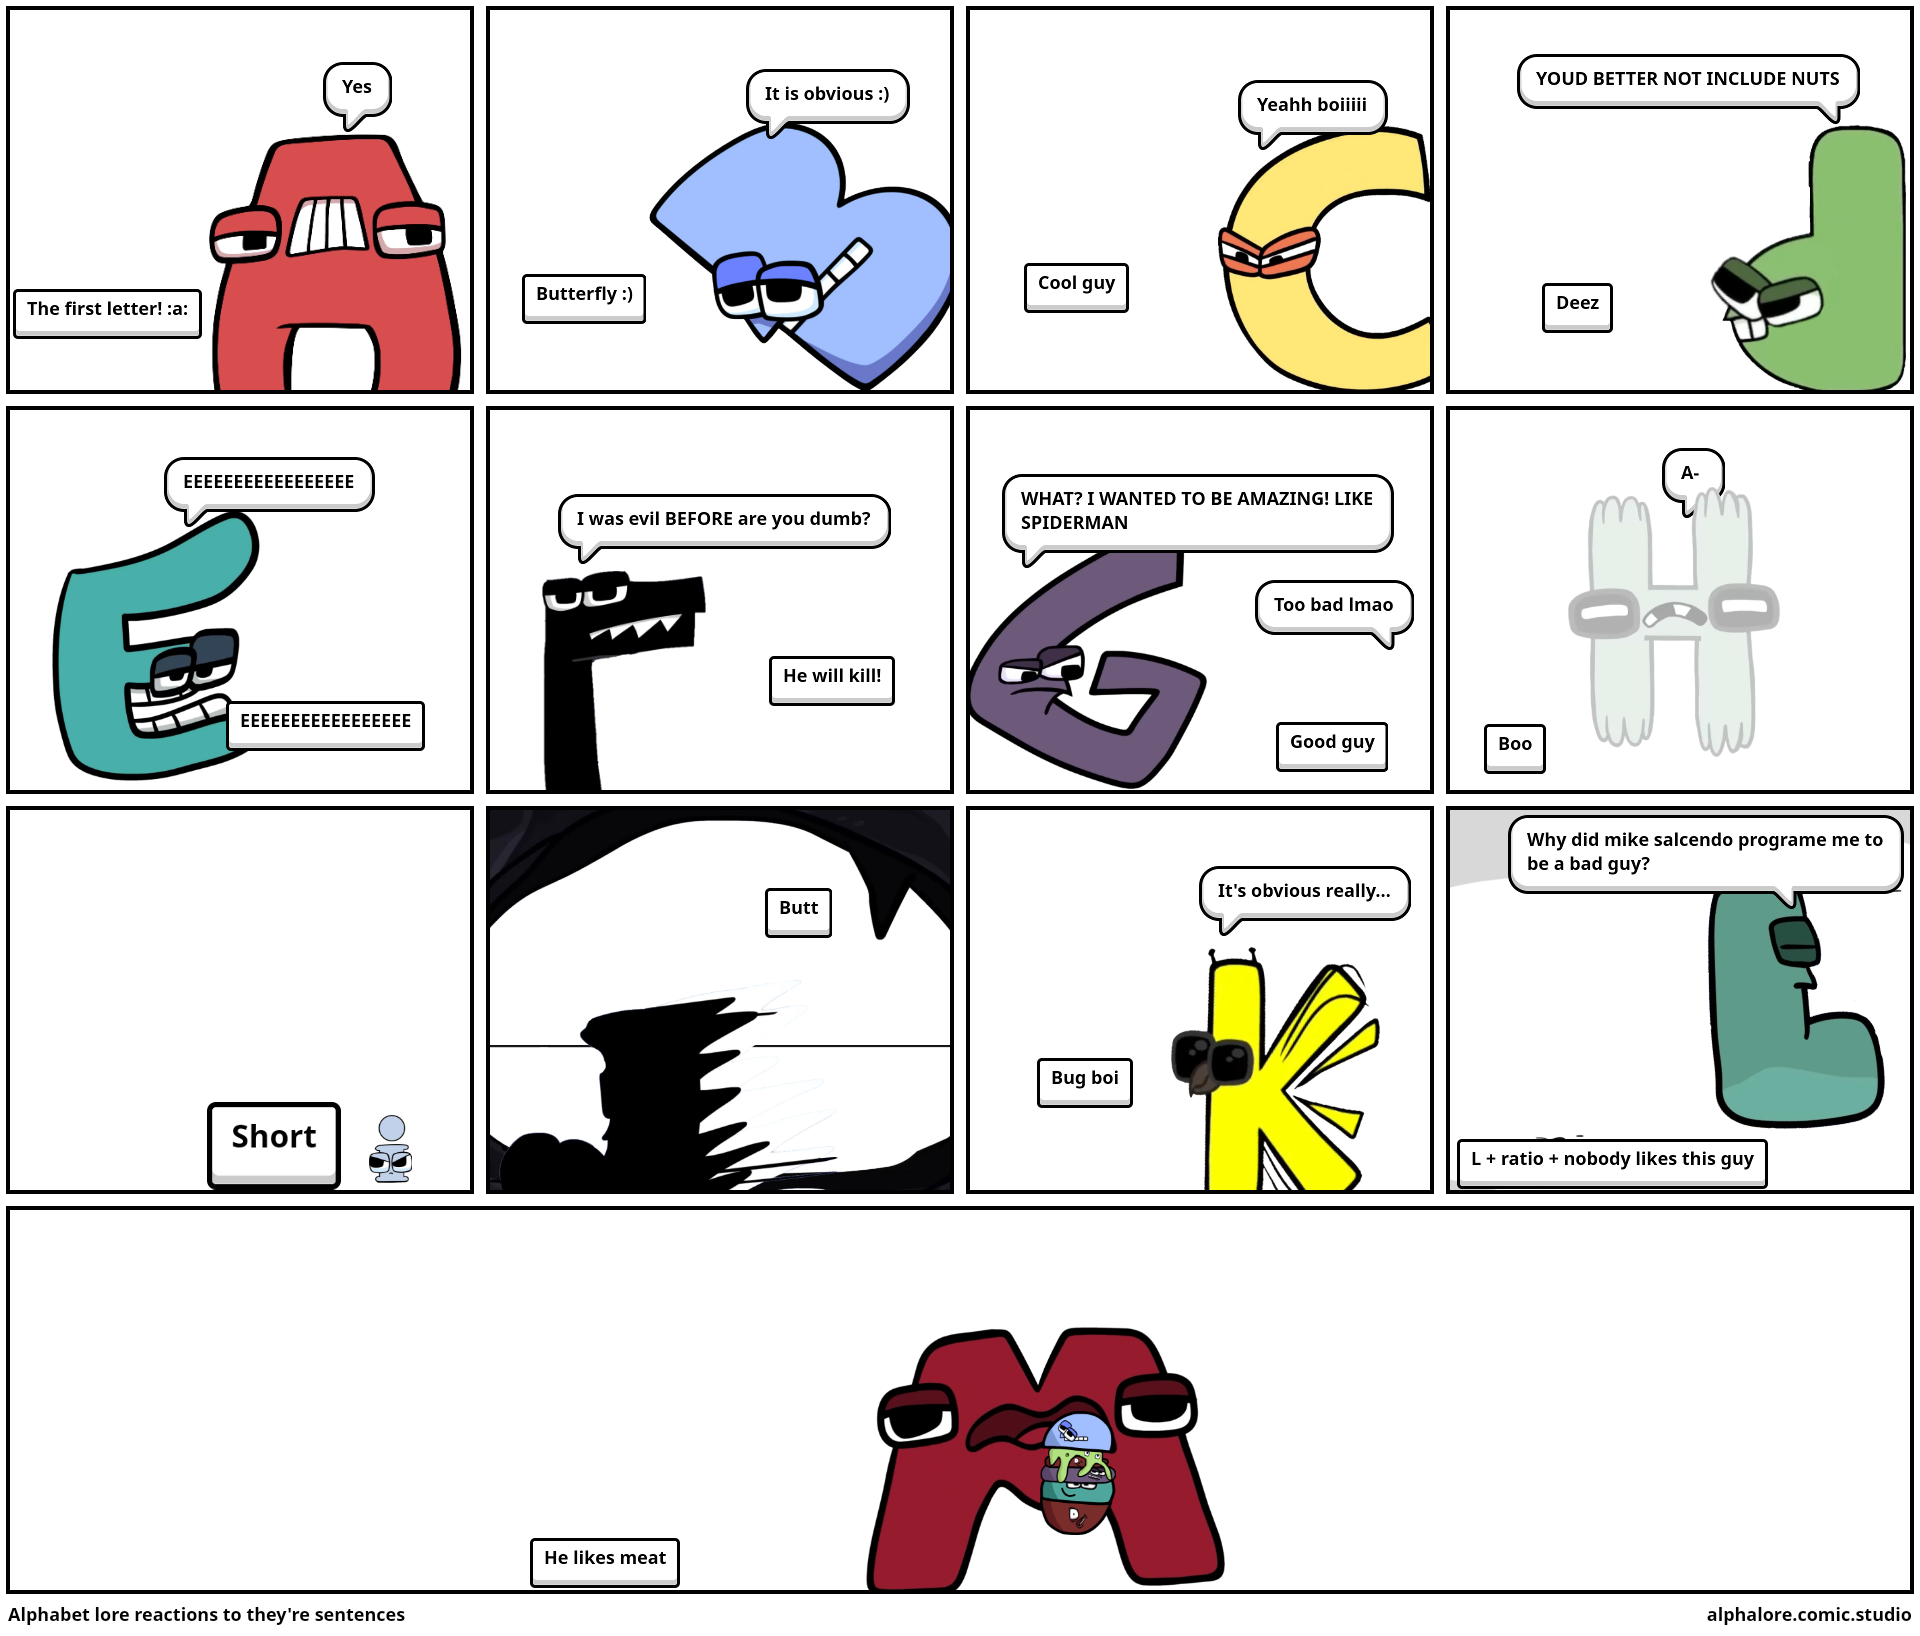 File_B 001  but it is porly made in alphabet lore comic studio :  r/alphabetfriends